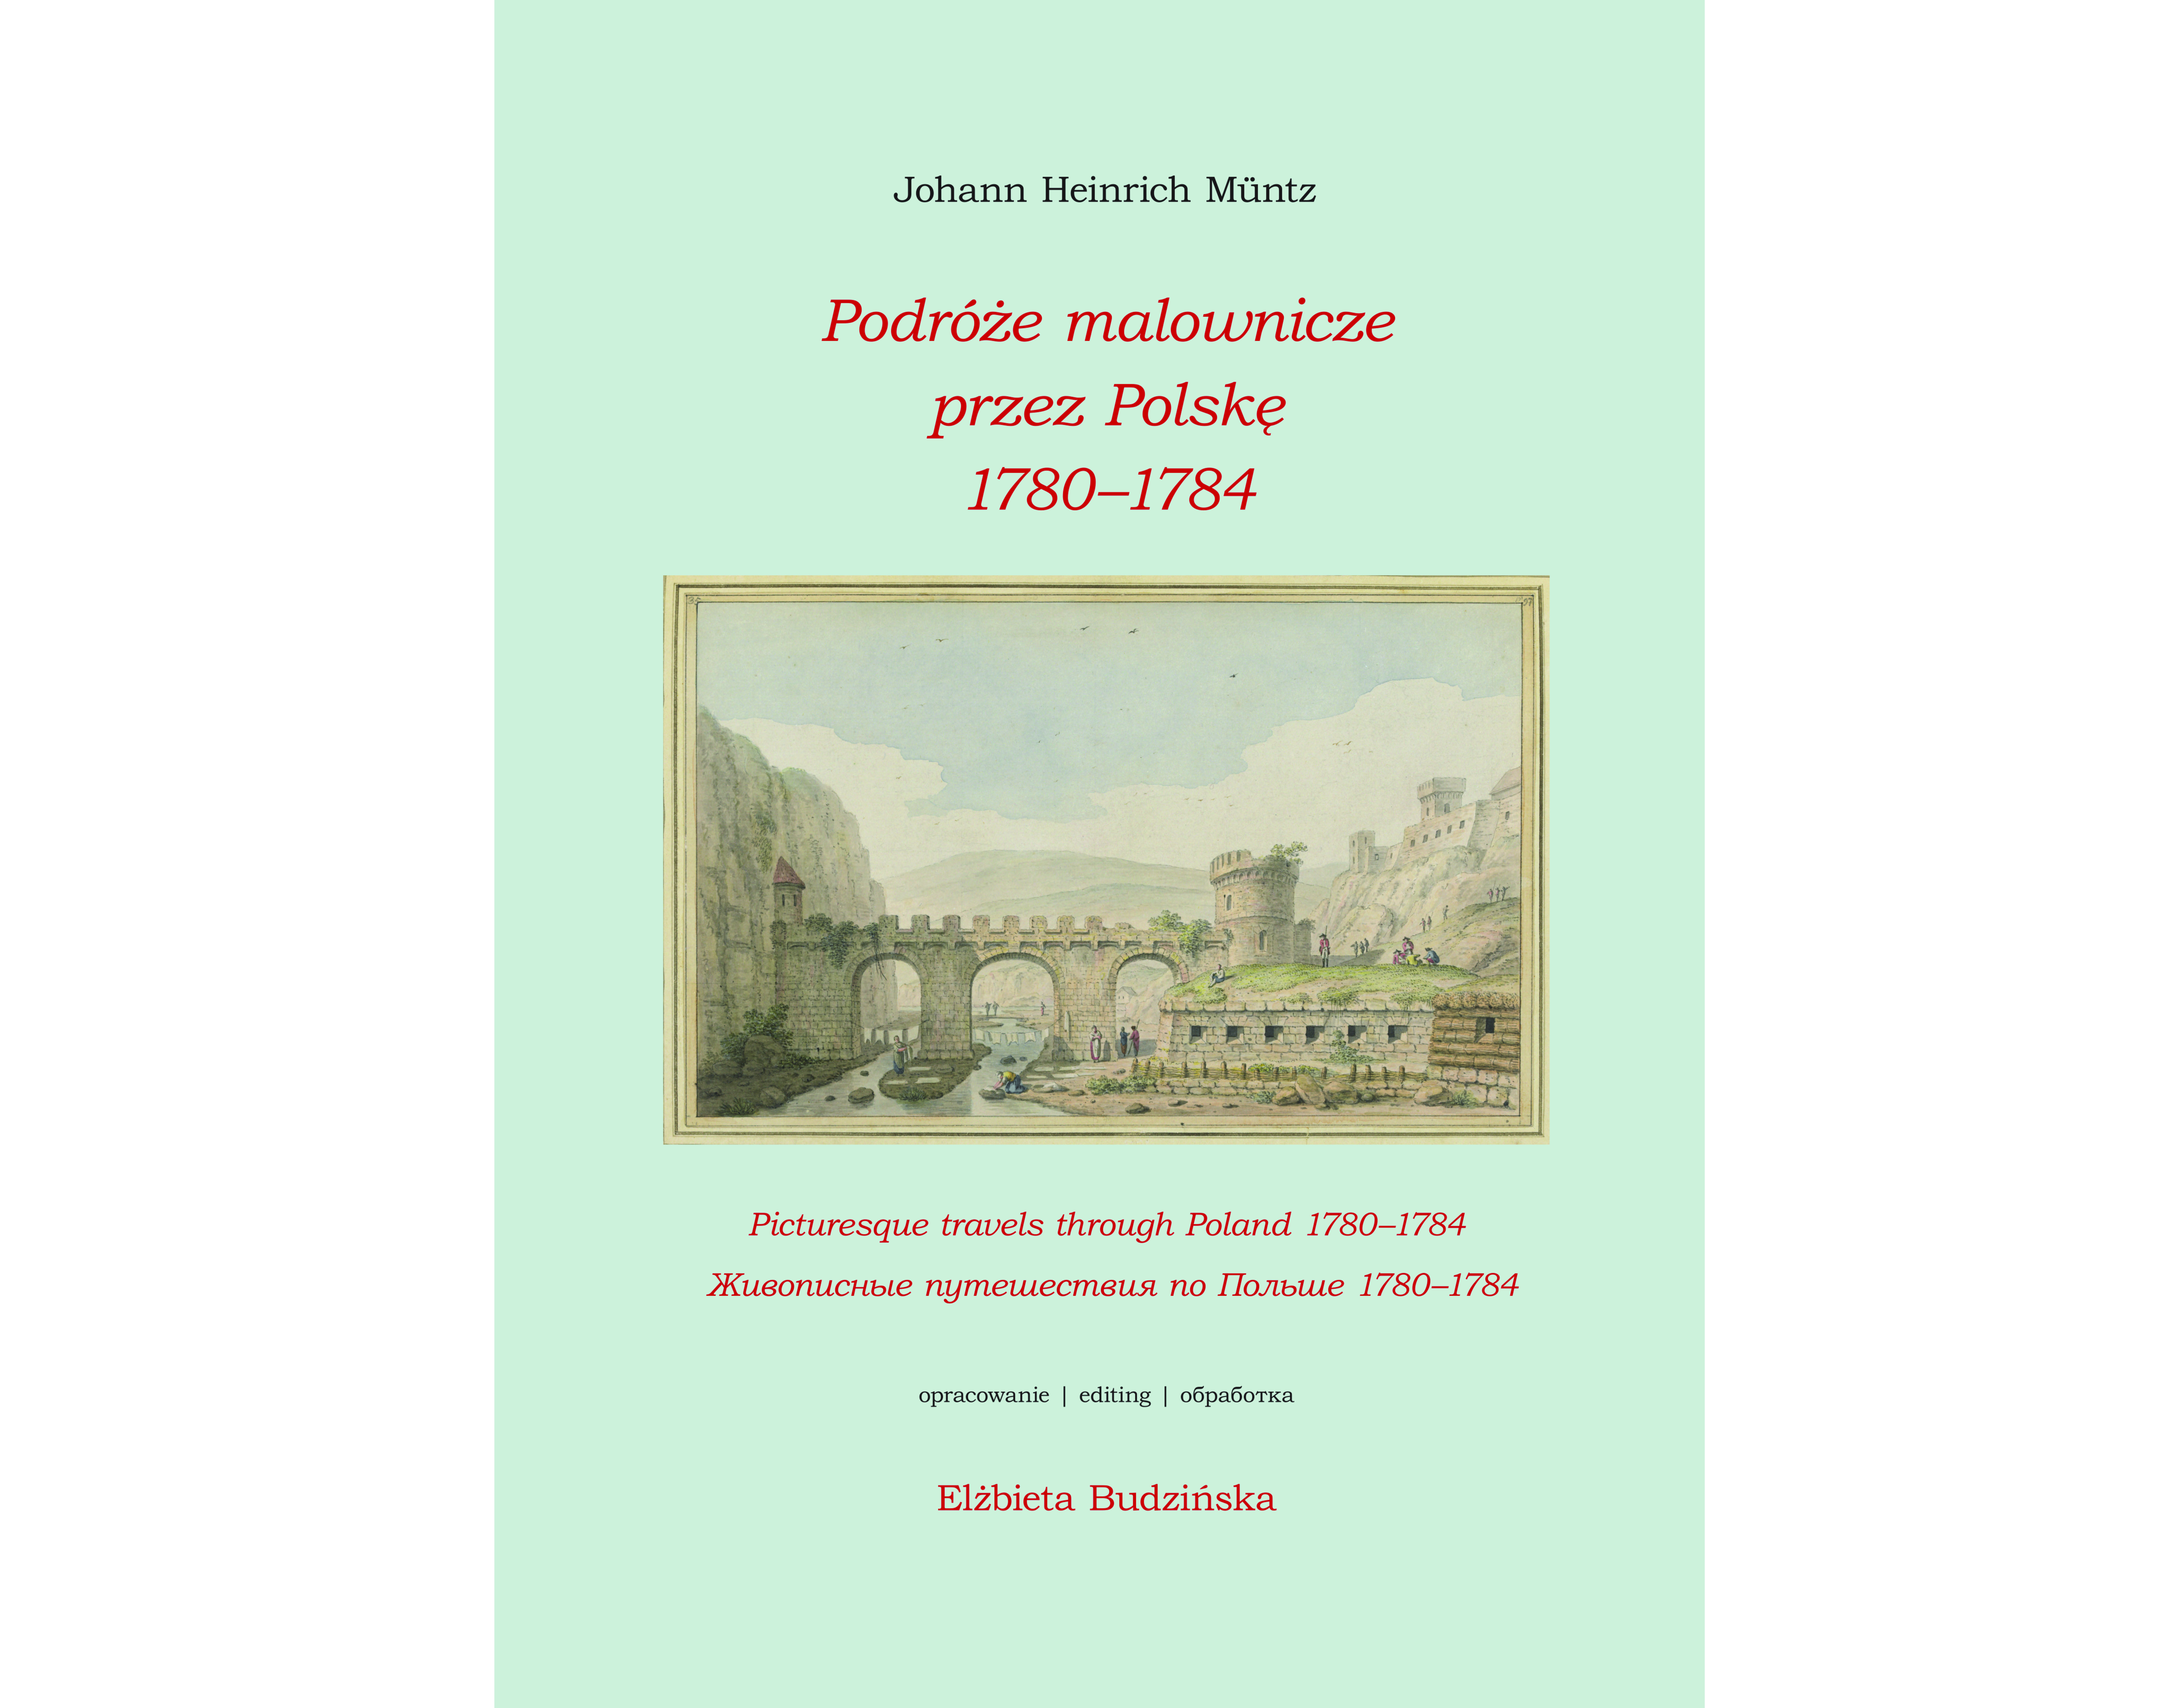 Fotografia przedstawiająca \"Picturesque journeys through Poland 1780-1784\" - publication of the Polonica Institute